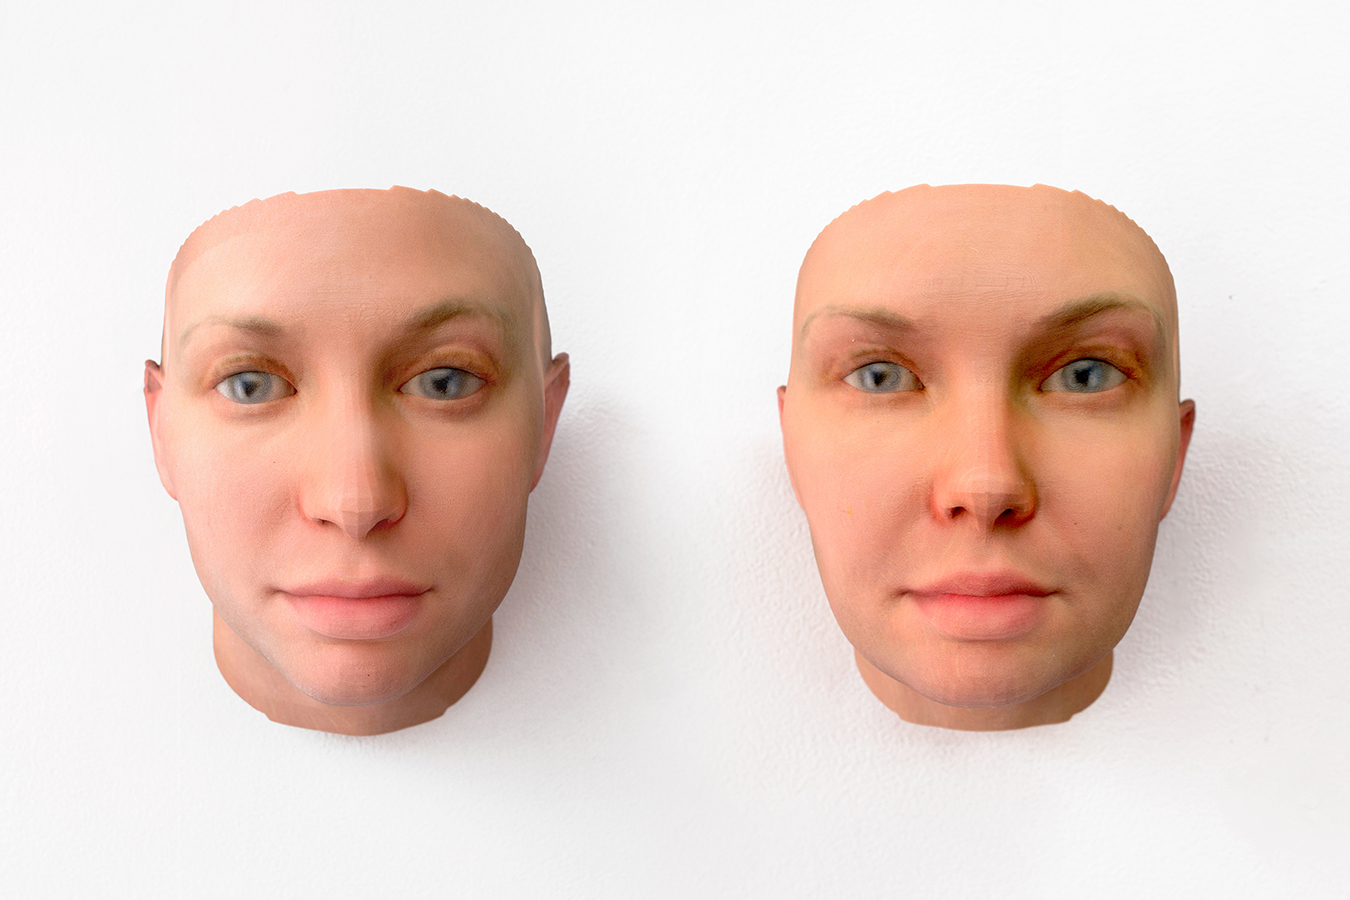 Radical Love, DNA portrait of  Chelsea Manning, by Heather Dewey-Hagborg (c) courtesy of Heather Dewey-Hagborg and Fridman Gallery, New York City. 